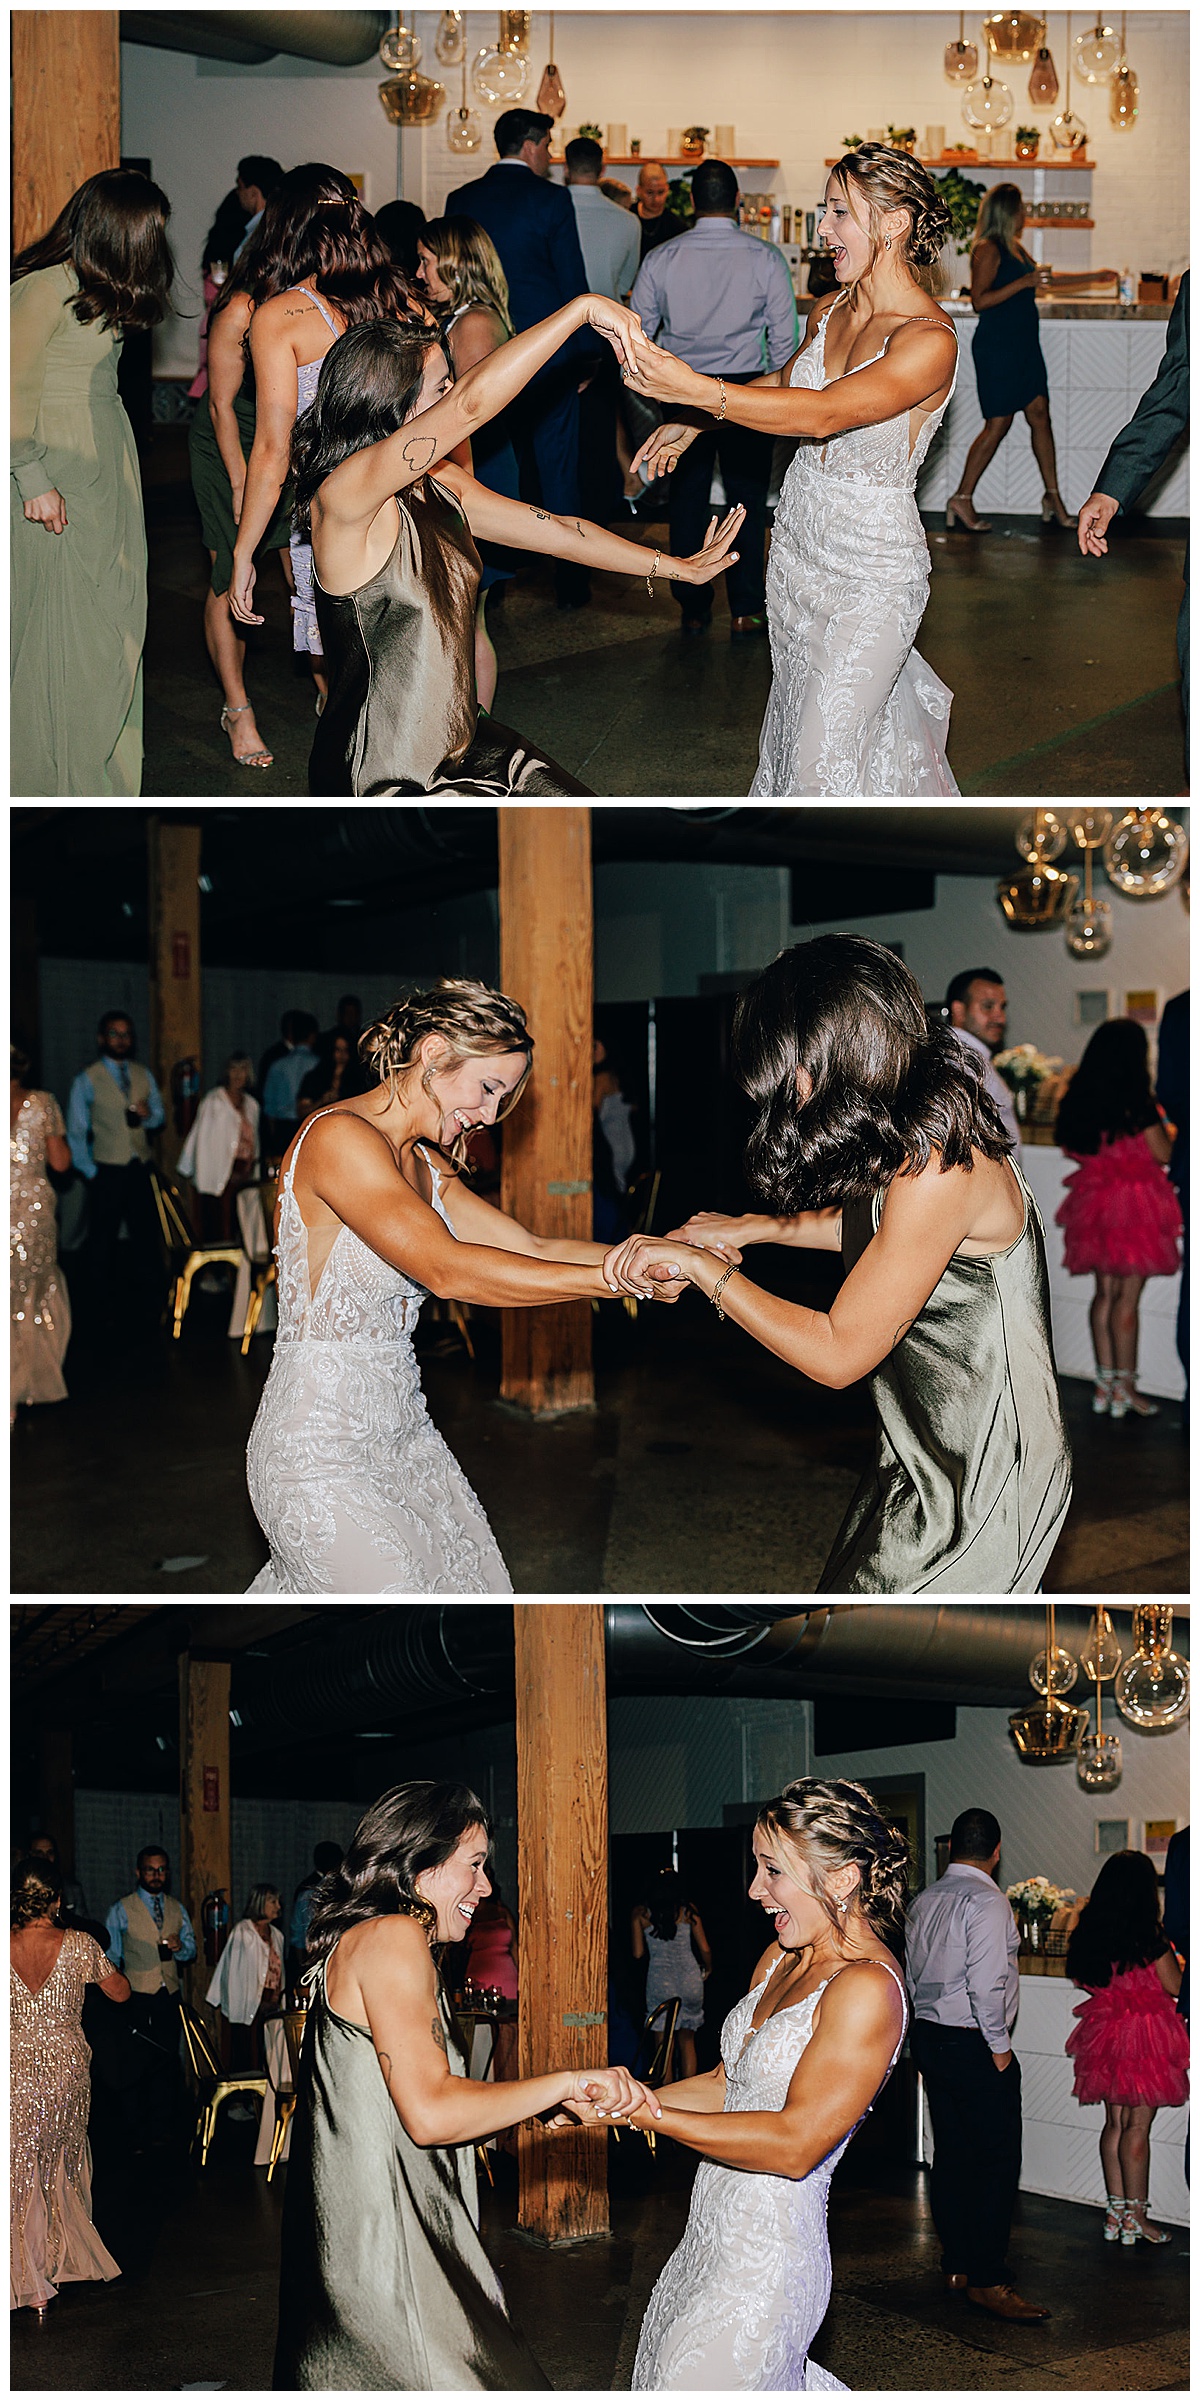 Dance floor fun for Detroit Wedding Photographer